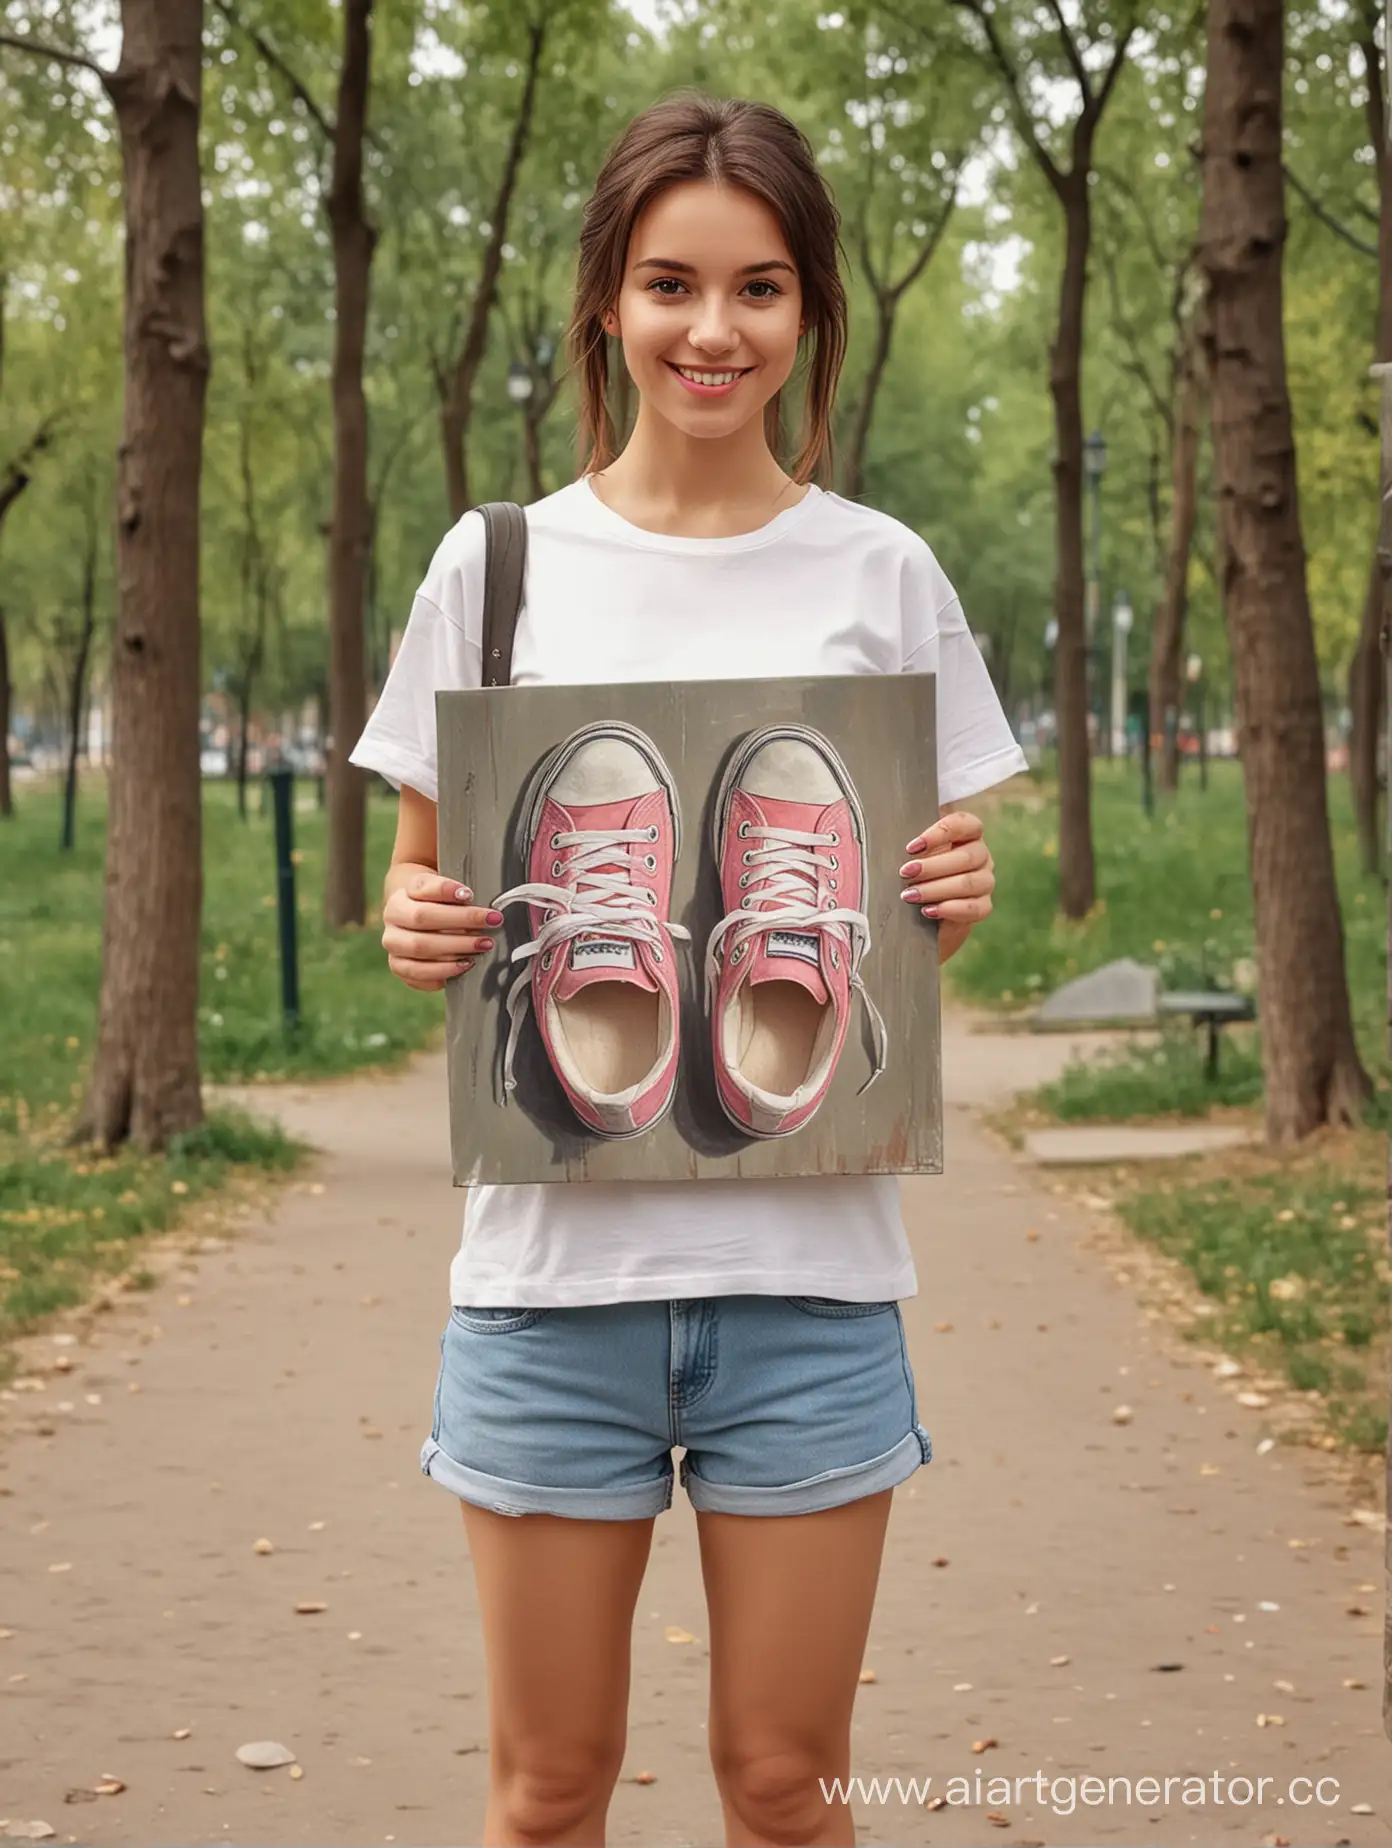 Joyful-Young-Woman-Holding-Canvas-Portrait-Outdoors